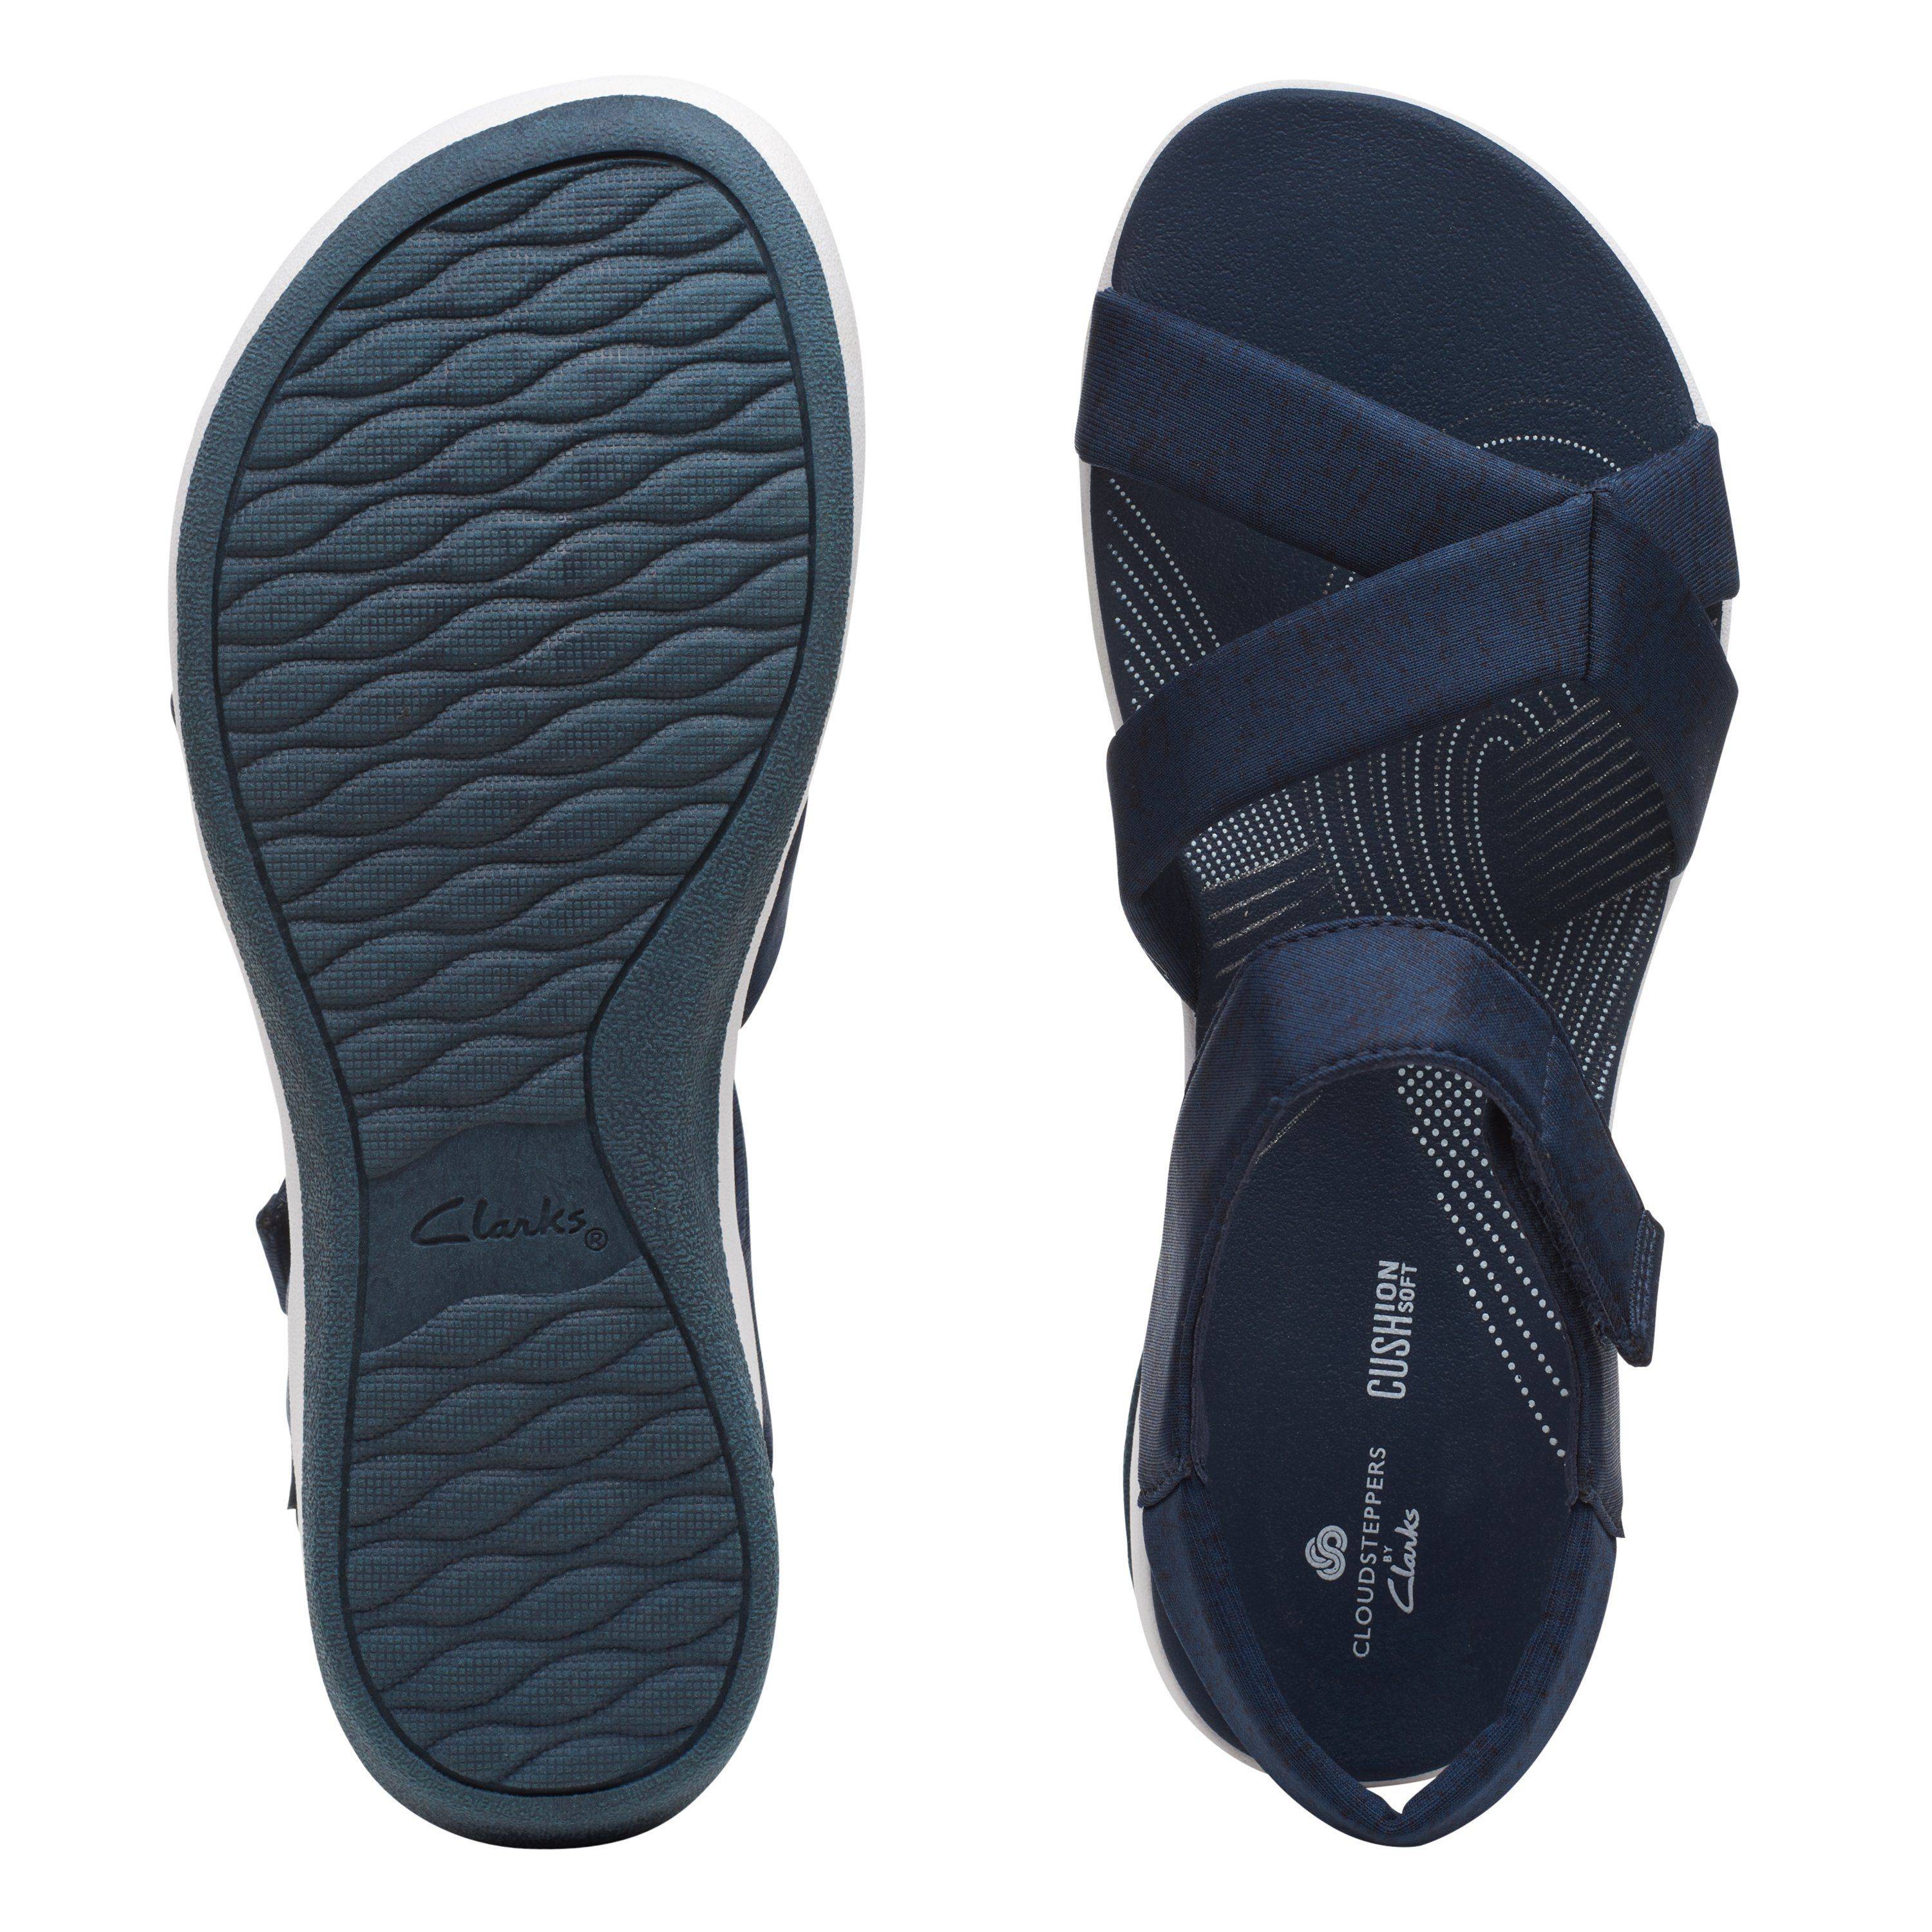 Женские сандалии Clarks, синие, цвет синий, размер 40 - фото 7